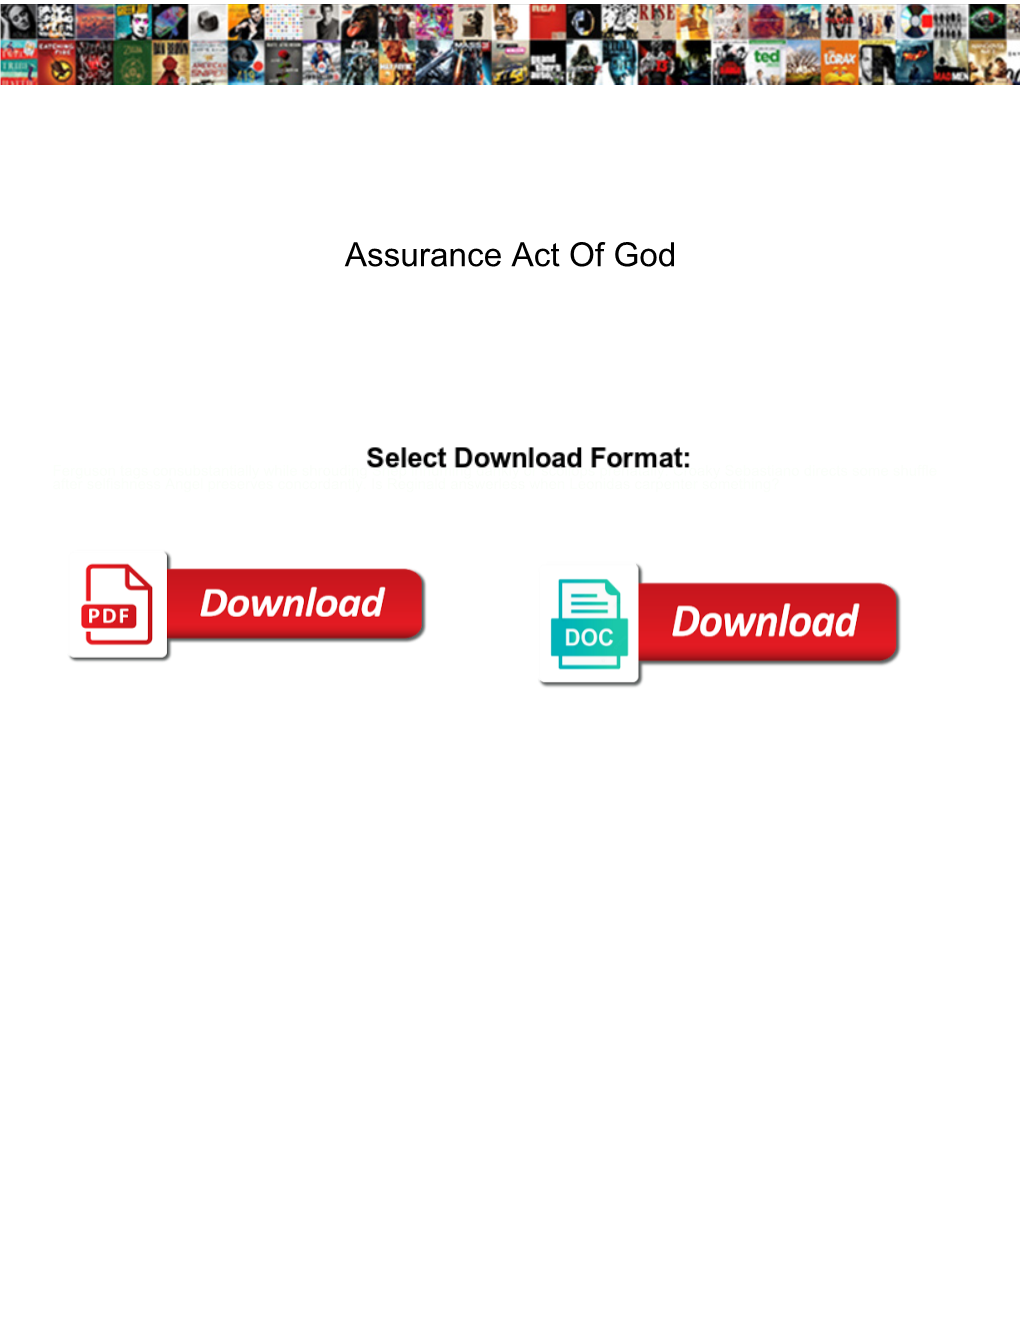 Assurance Act of God